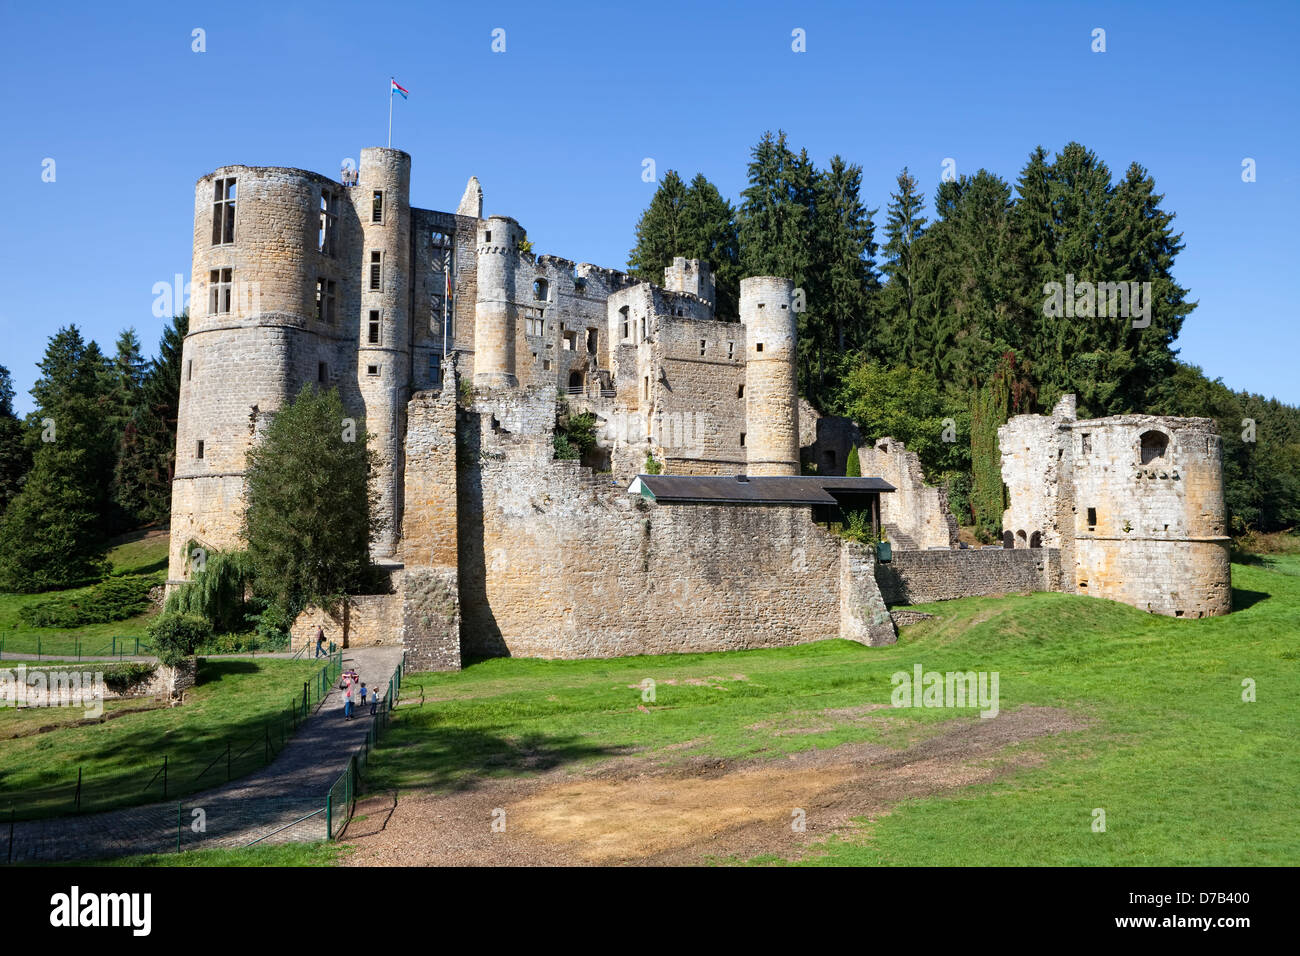 Le rovine del castello di Beaufort o Belfort, LUSSEMBURGO, Europa, Die Burgruine Beaufort oder Belfort, LUSSEMBURGO, Europa Foto Stock